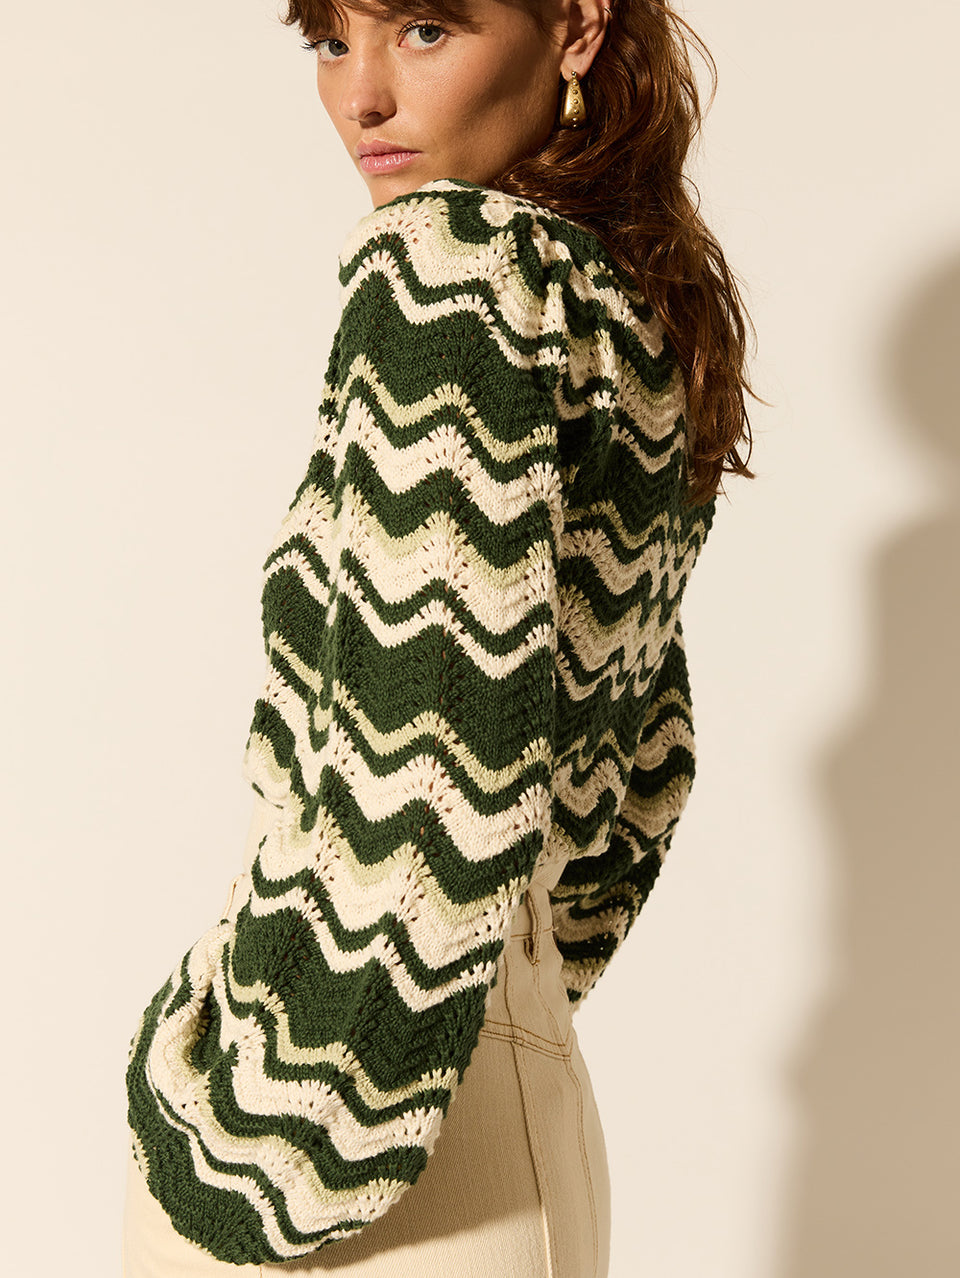 Marcella Knit Top KIVARI | Model wears green and cream knit top